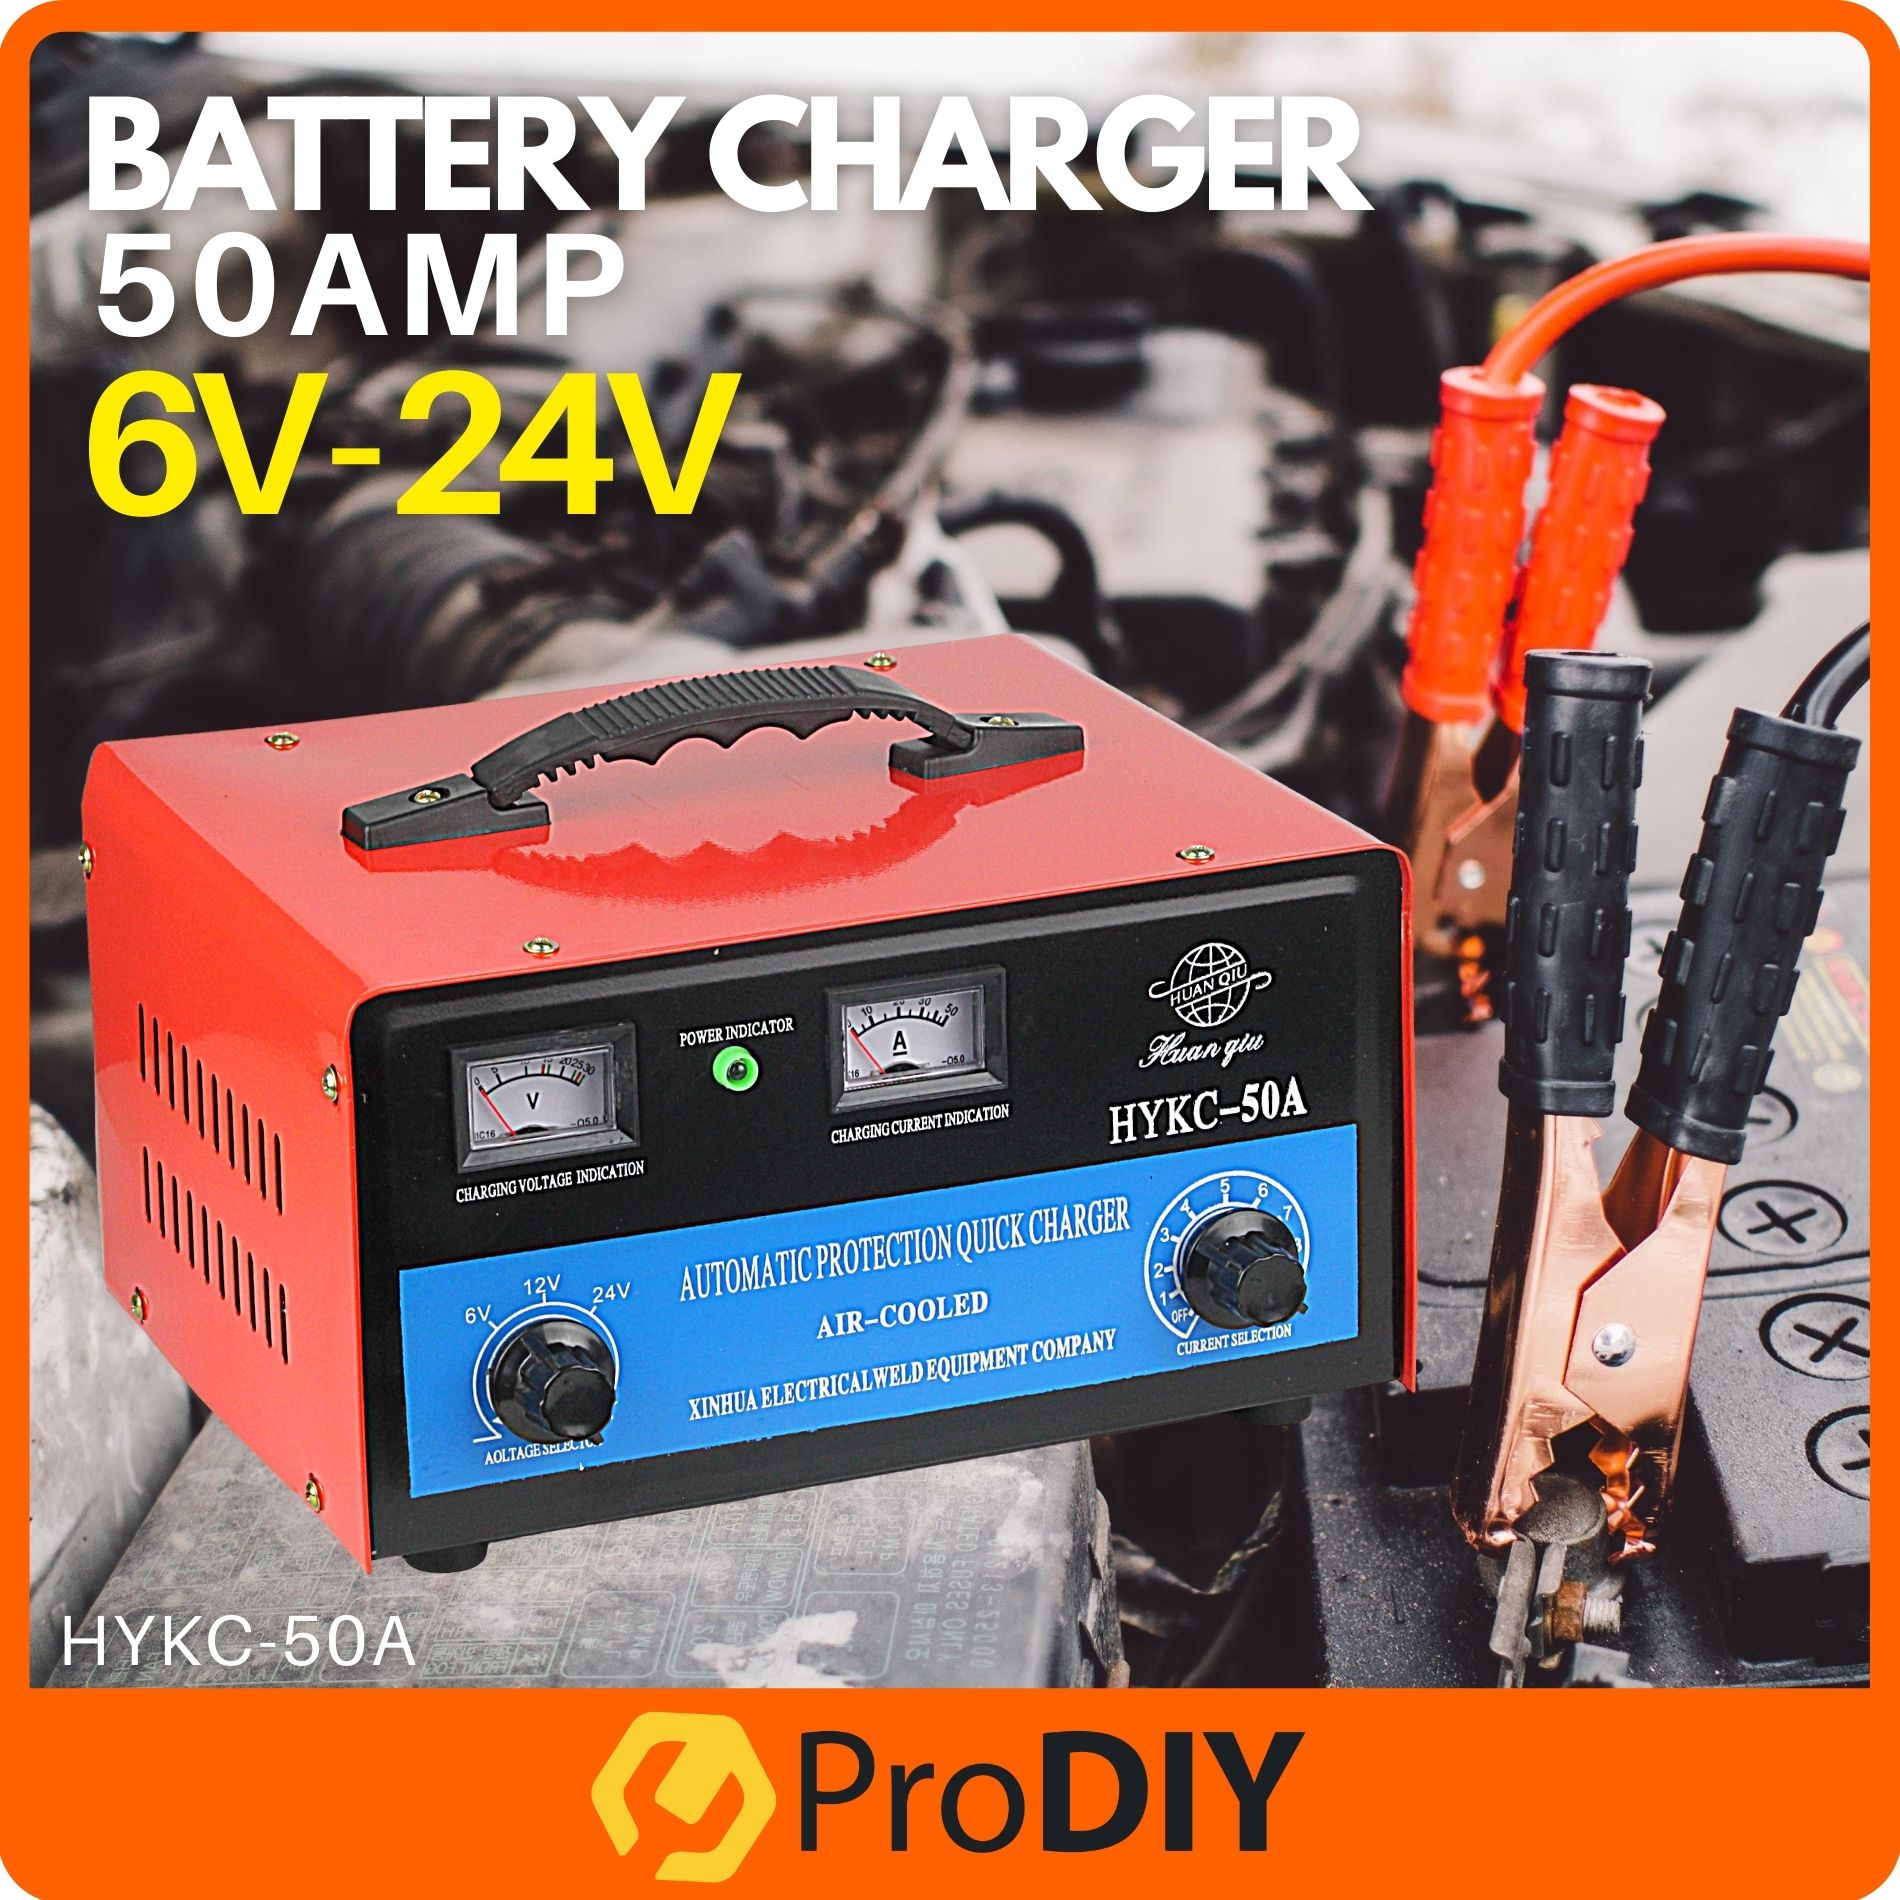 6V / 12V / 24V Battery Charger 50AMP 50A Electric Power Charging Car Motorcycle Pengecas Bateri Kereta ( HYKC-50A )